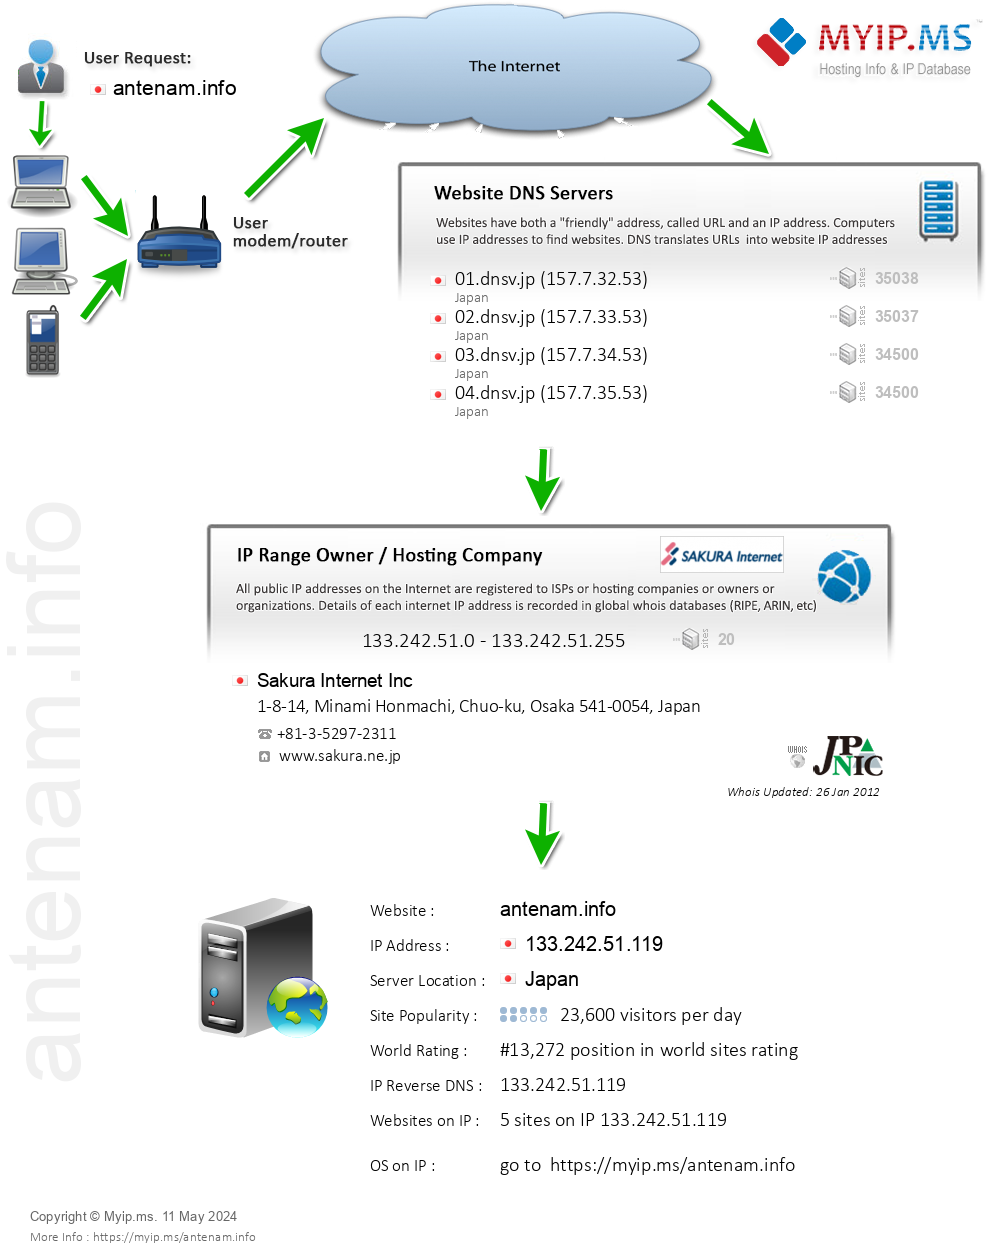 Antenam.info - Website Hosting Visual IP Diagram